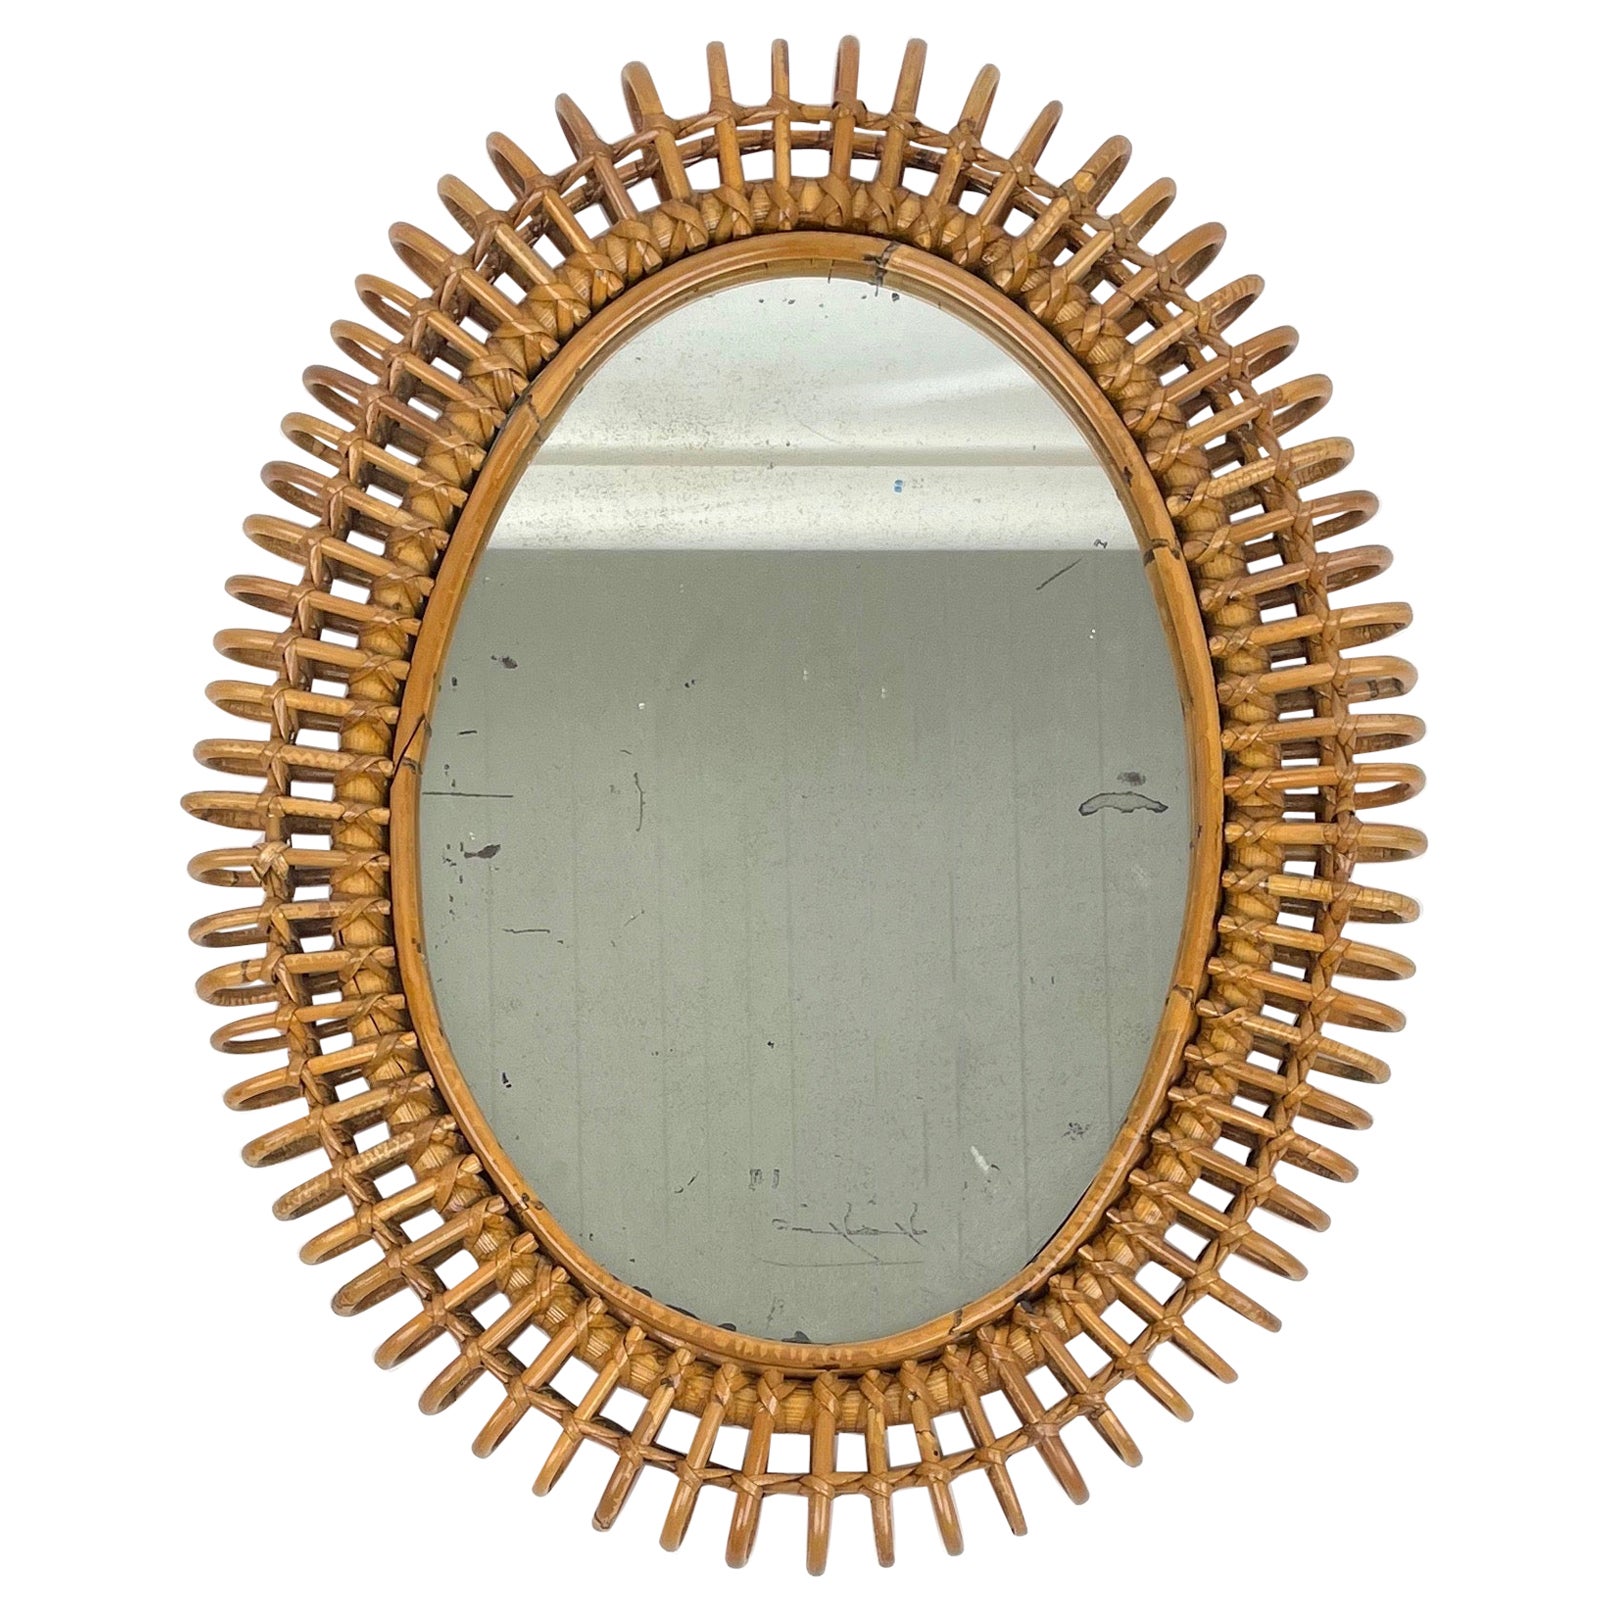 Midcentury Rattan & Bamboo Oval Wall Mirror, Italy, 1960s